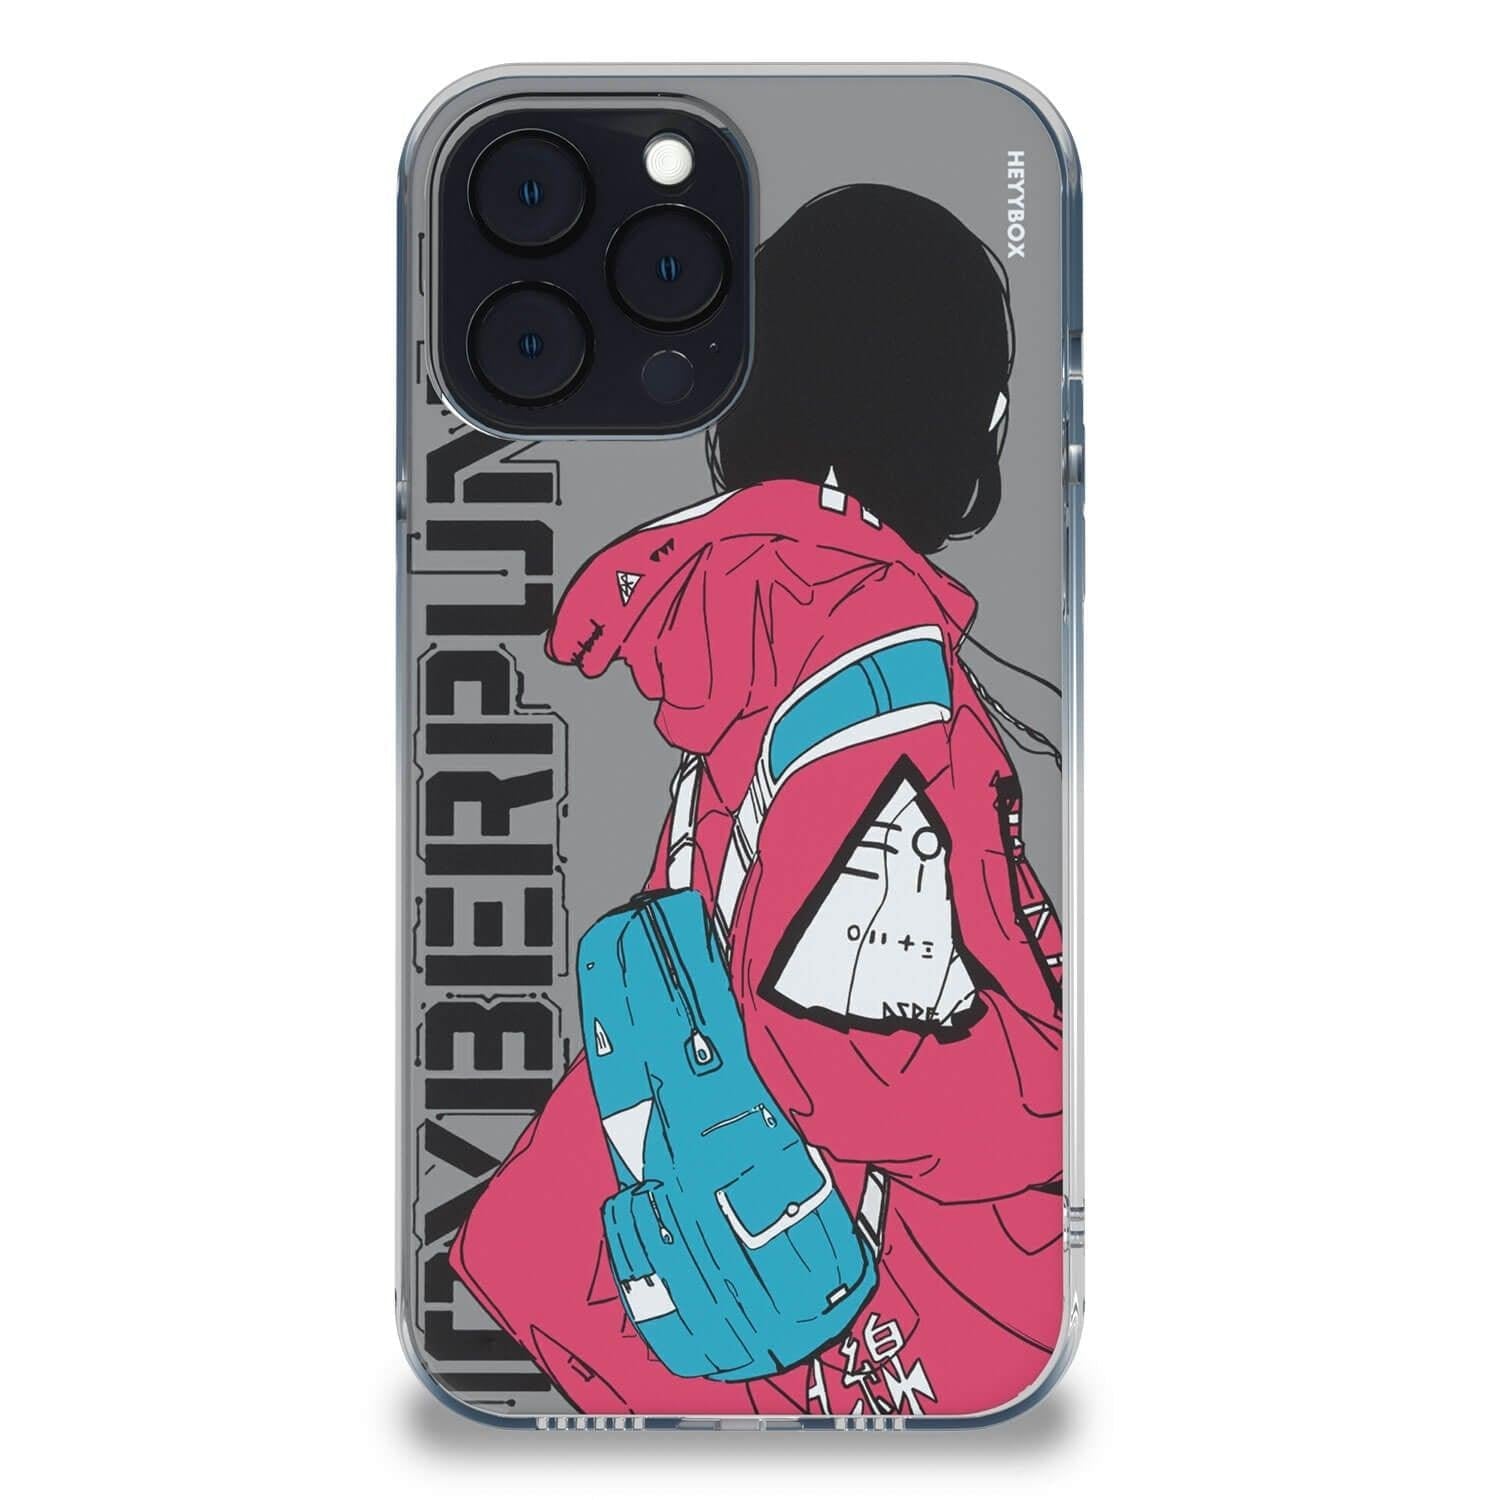 Cyberpunk Backpack Girl RGB Case for iPhone